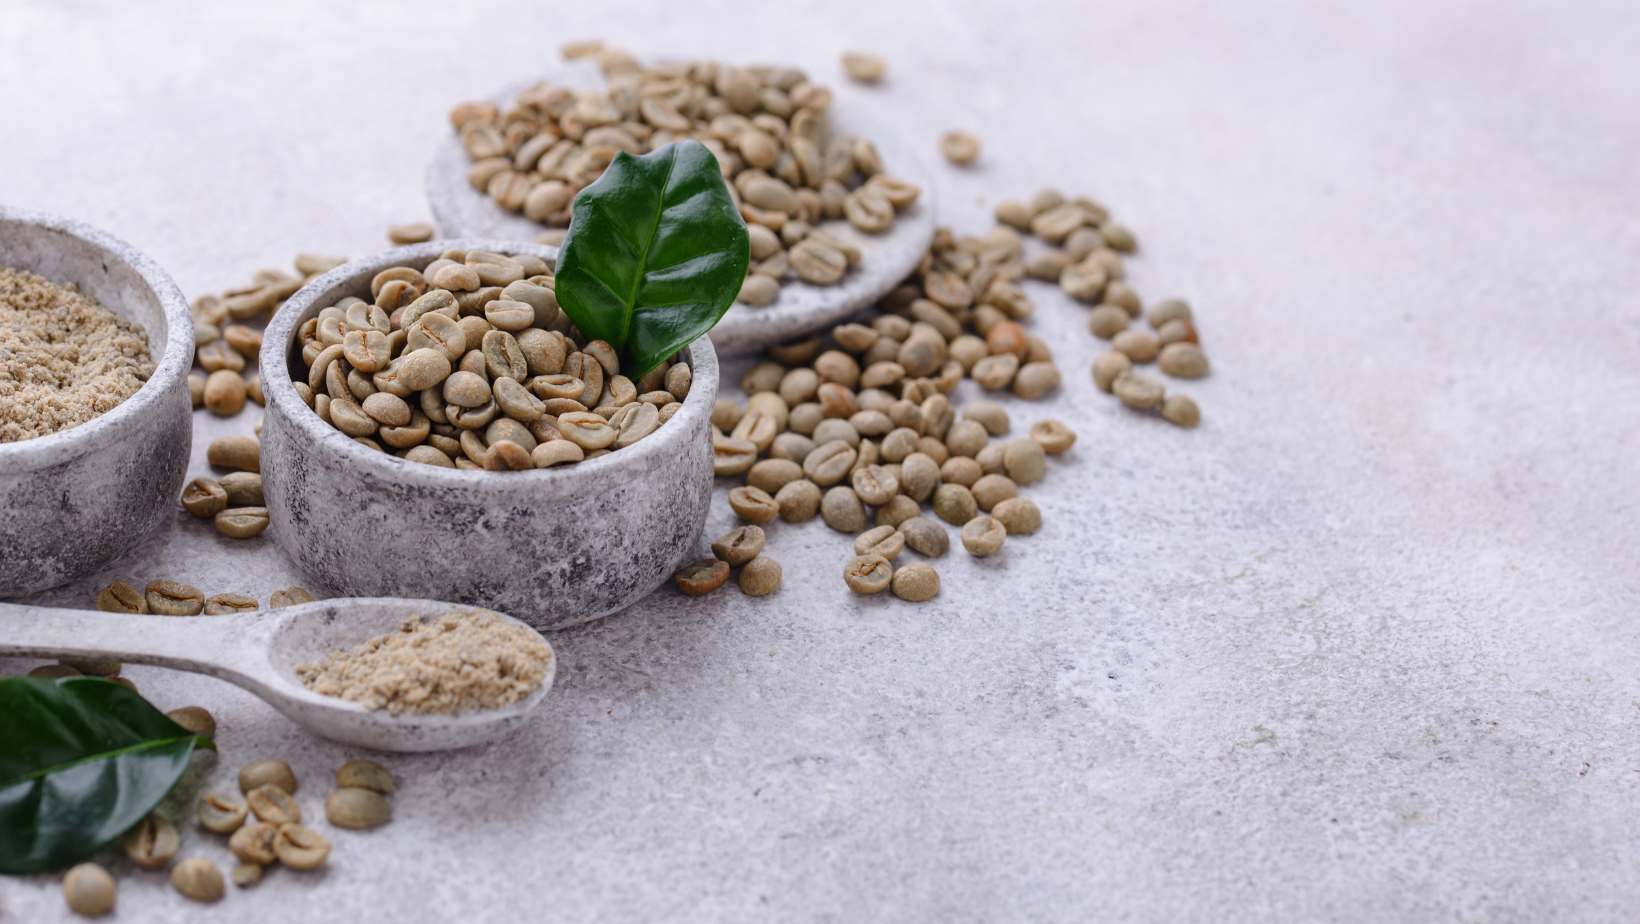 Best Green Coffee Beans